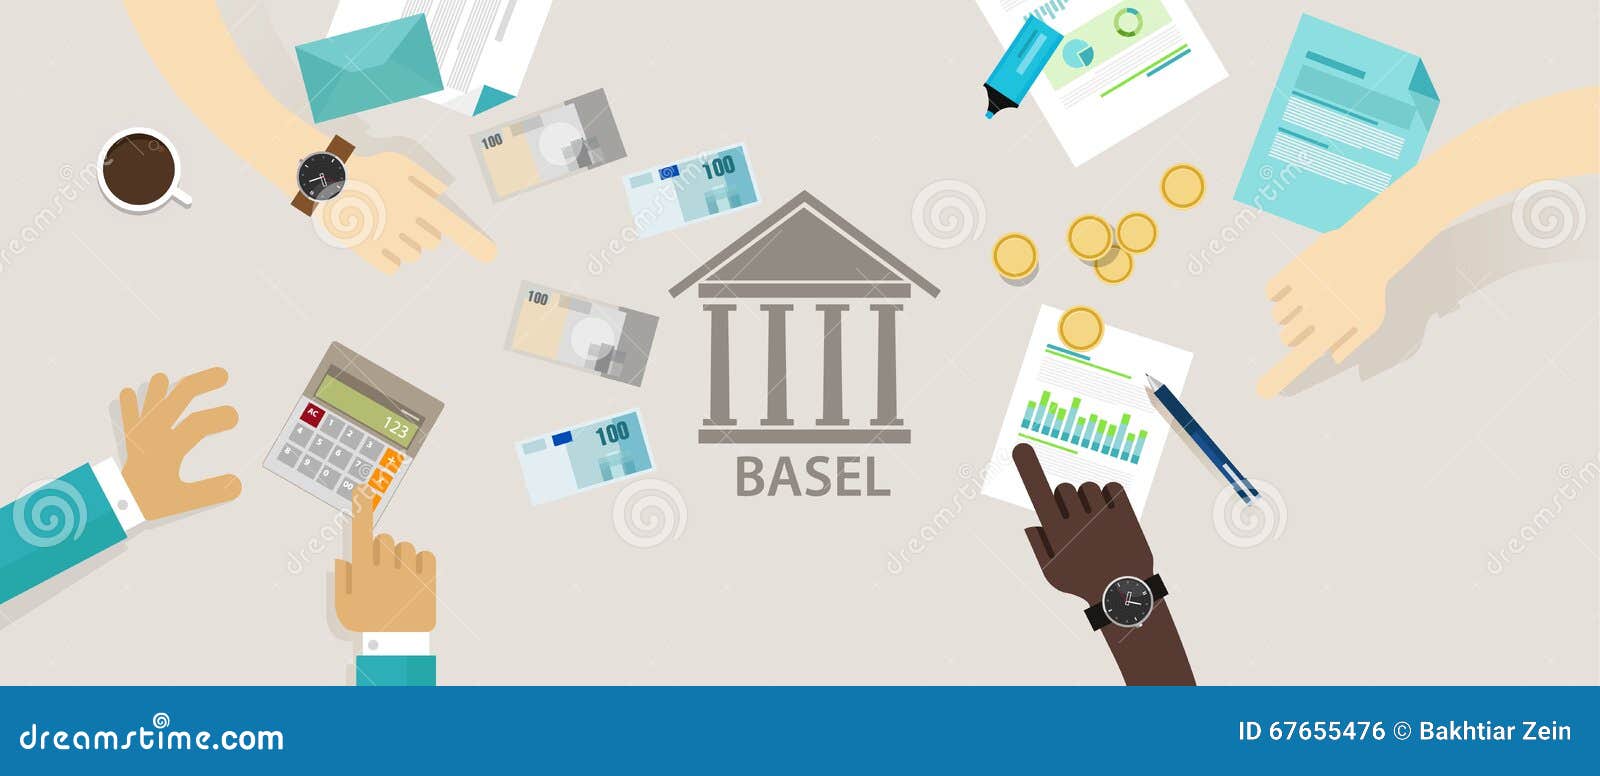 basel accord committee on banking supervision international regulatory framework for banks